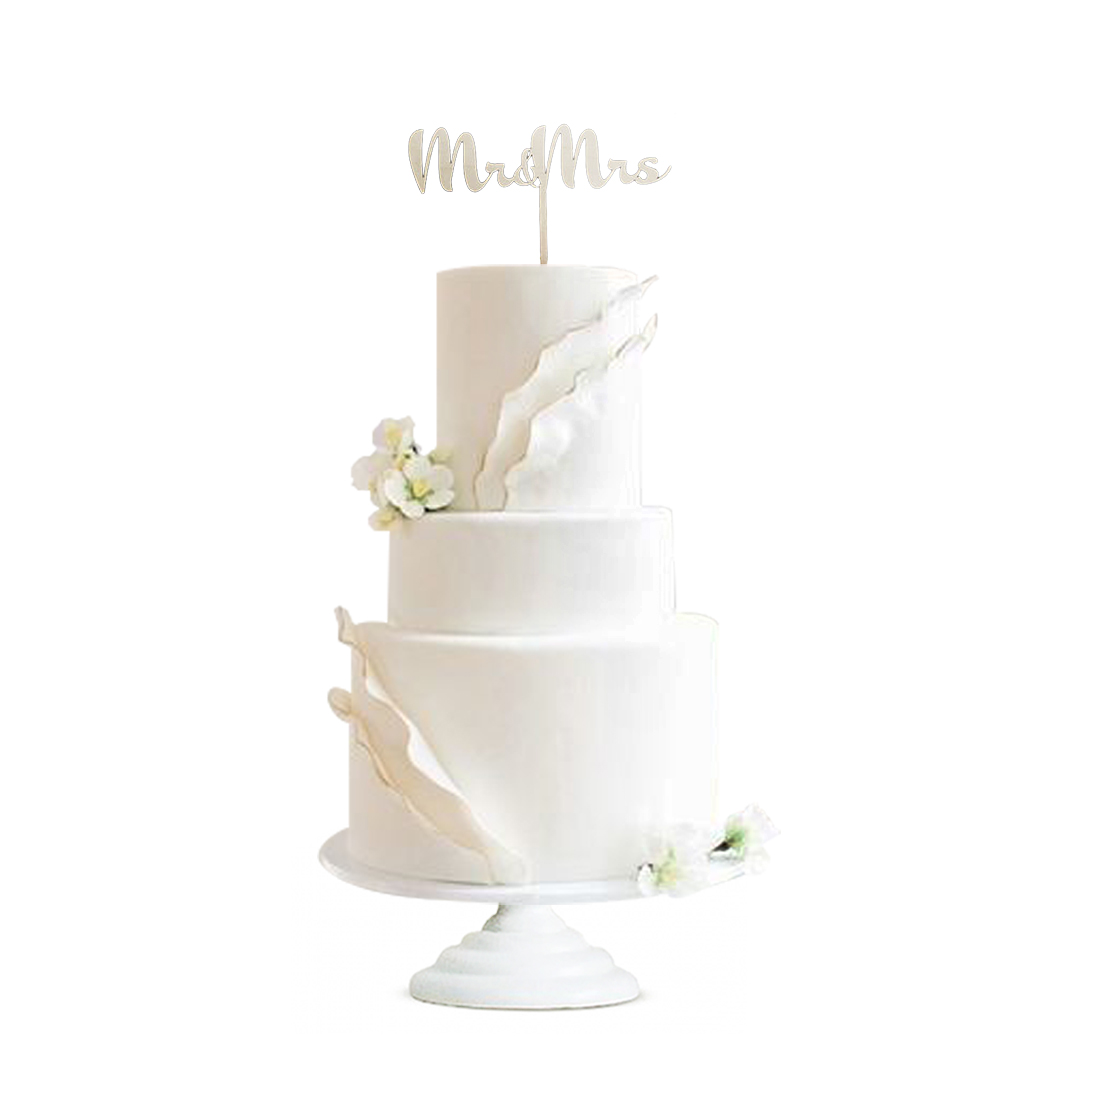 Mariage blanc, pastel para boda blanco moderno en pisos circulares